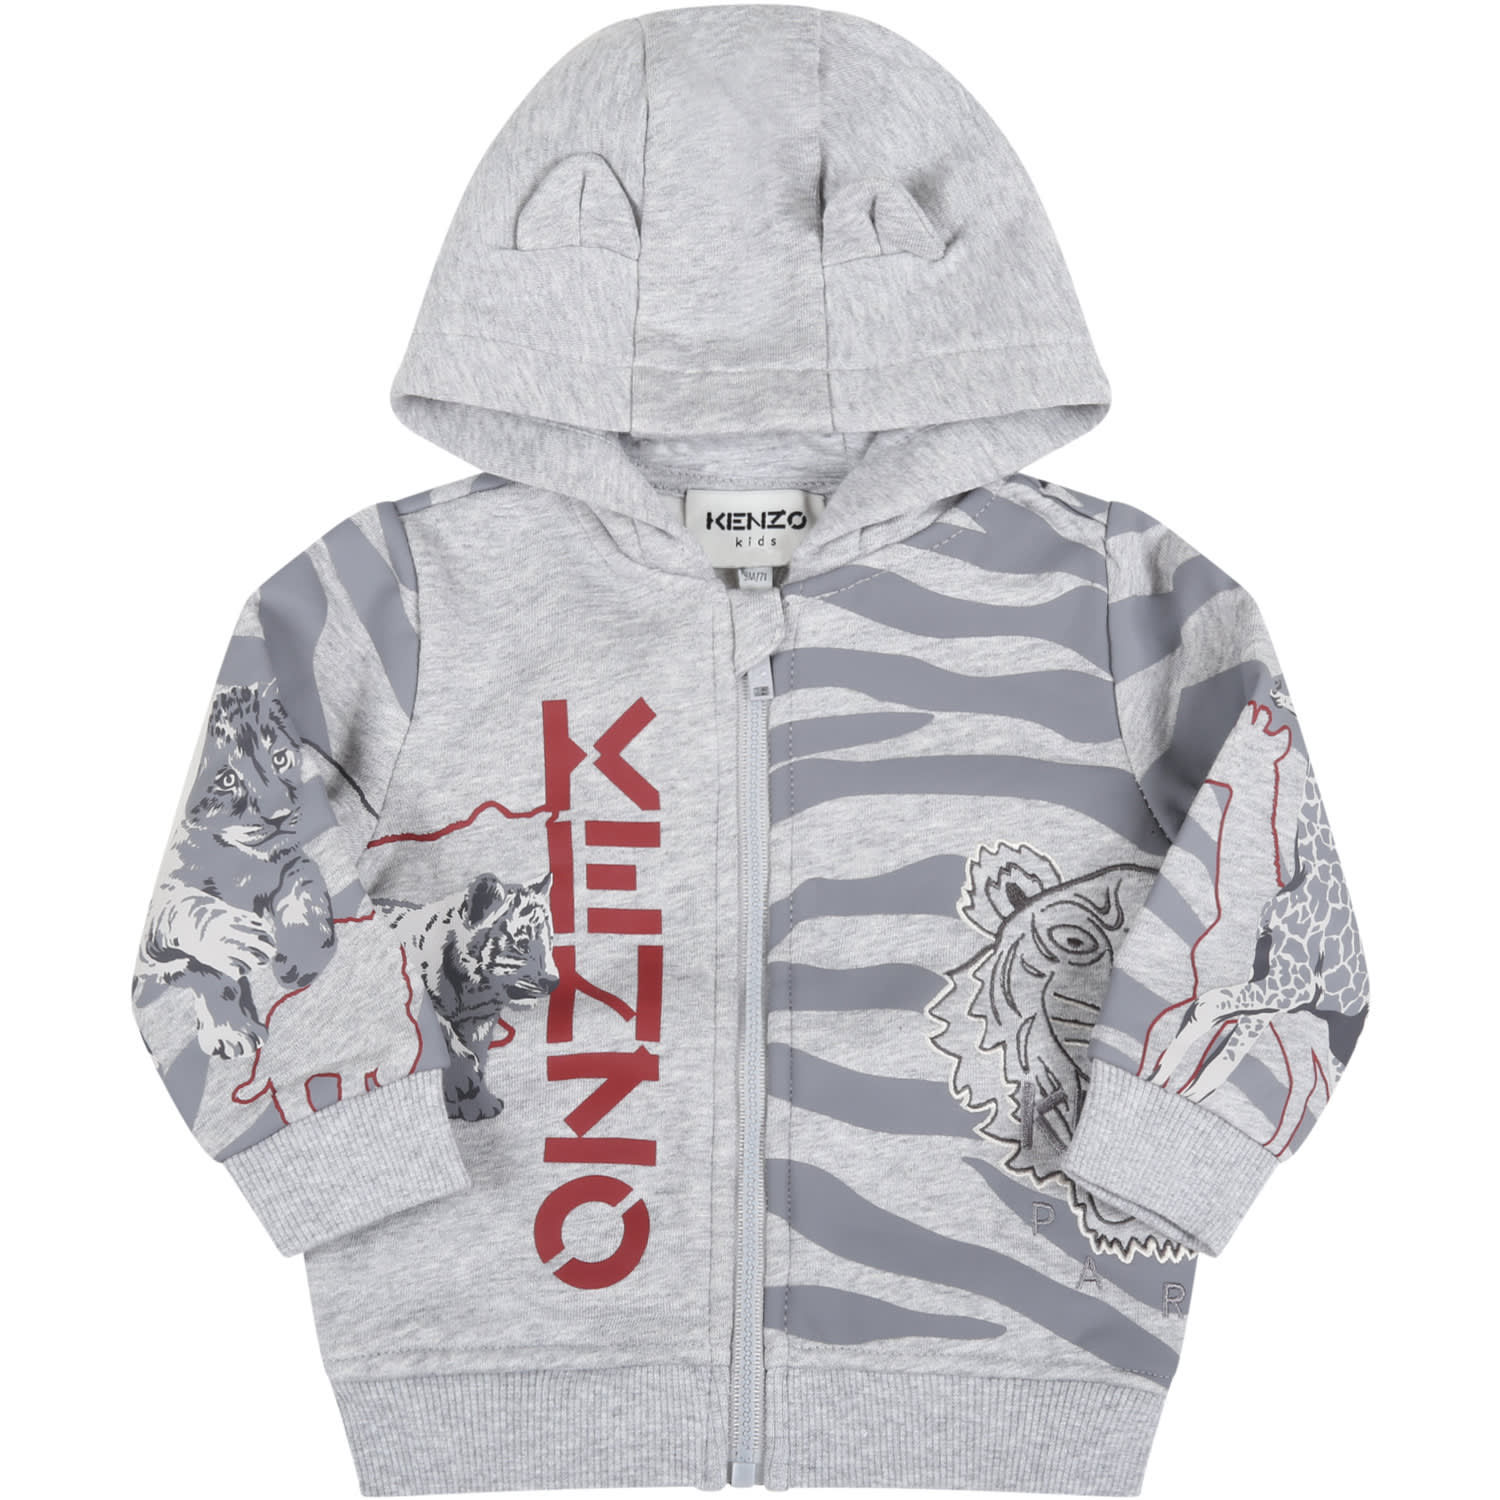 Kenzo Kids Grey Sweatshirt For Baby Boy With Tigers